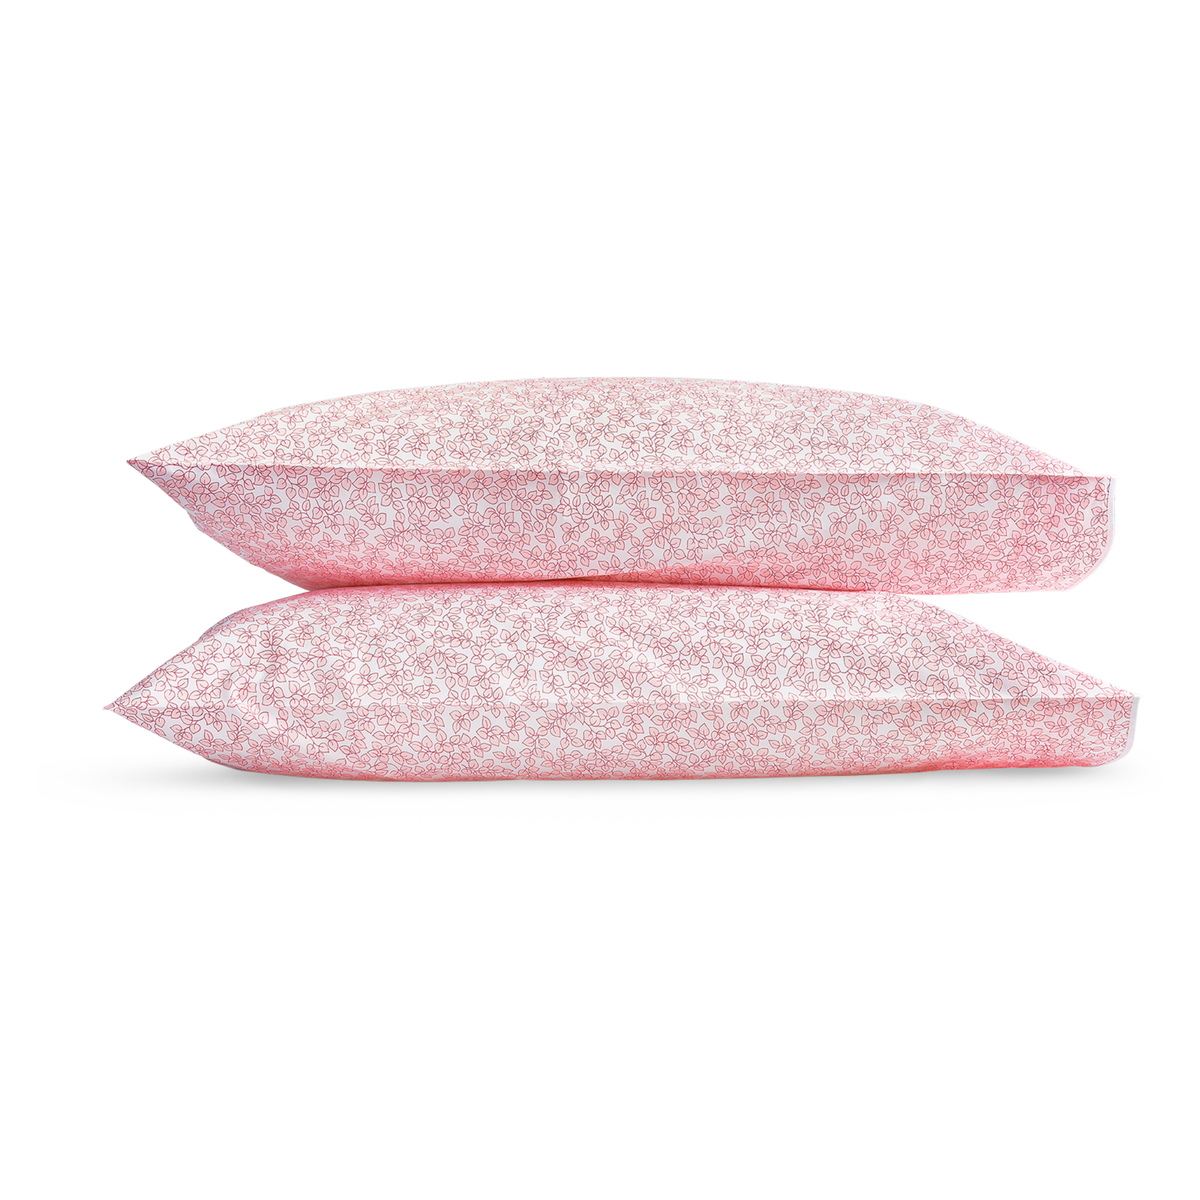 Pair of Pillowcases of Matouk Margot Bedding in Blush Color